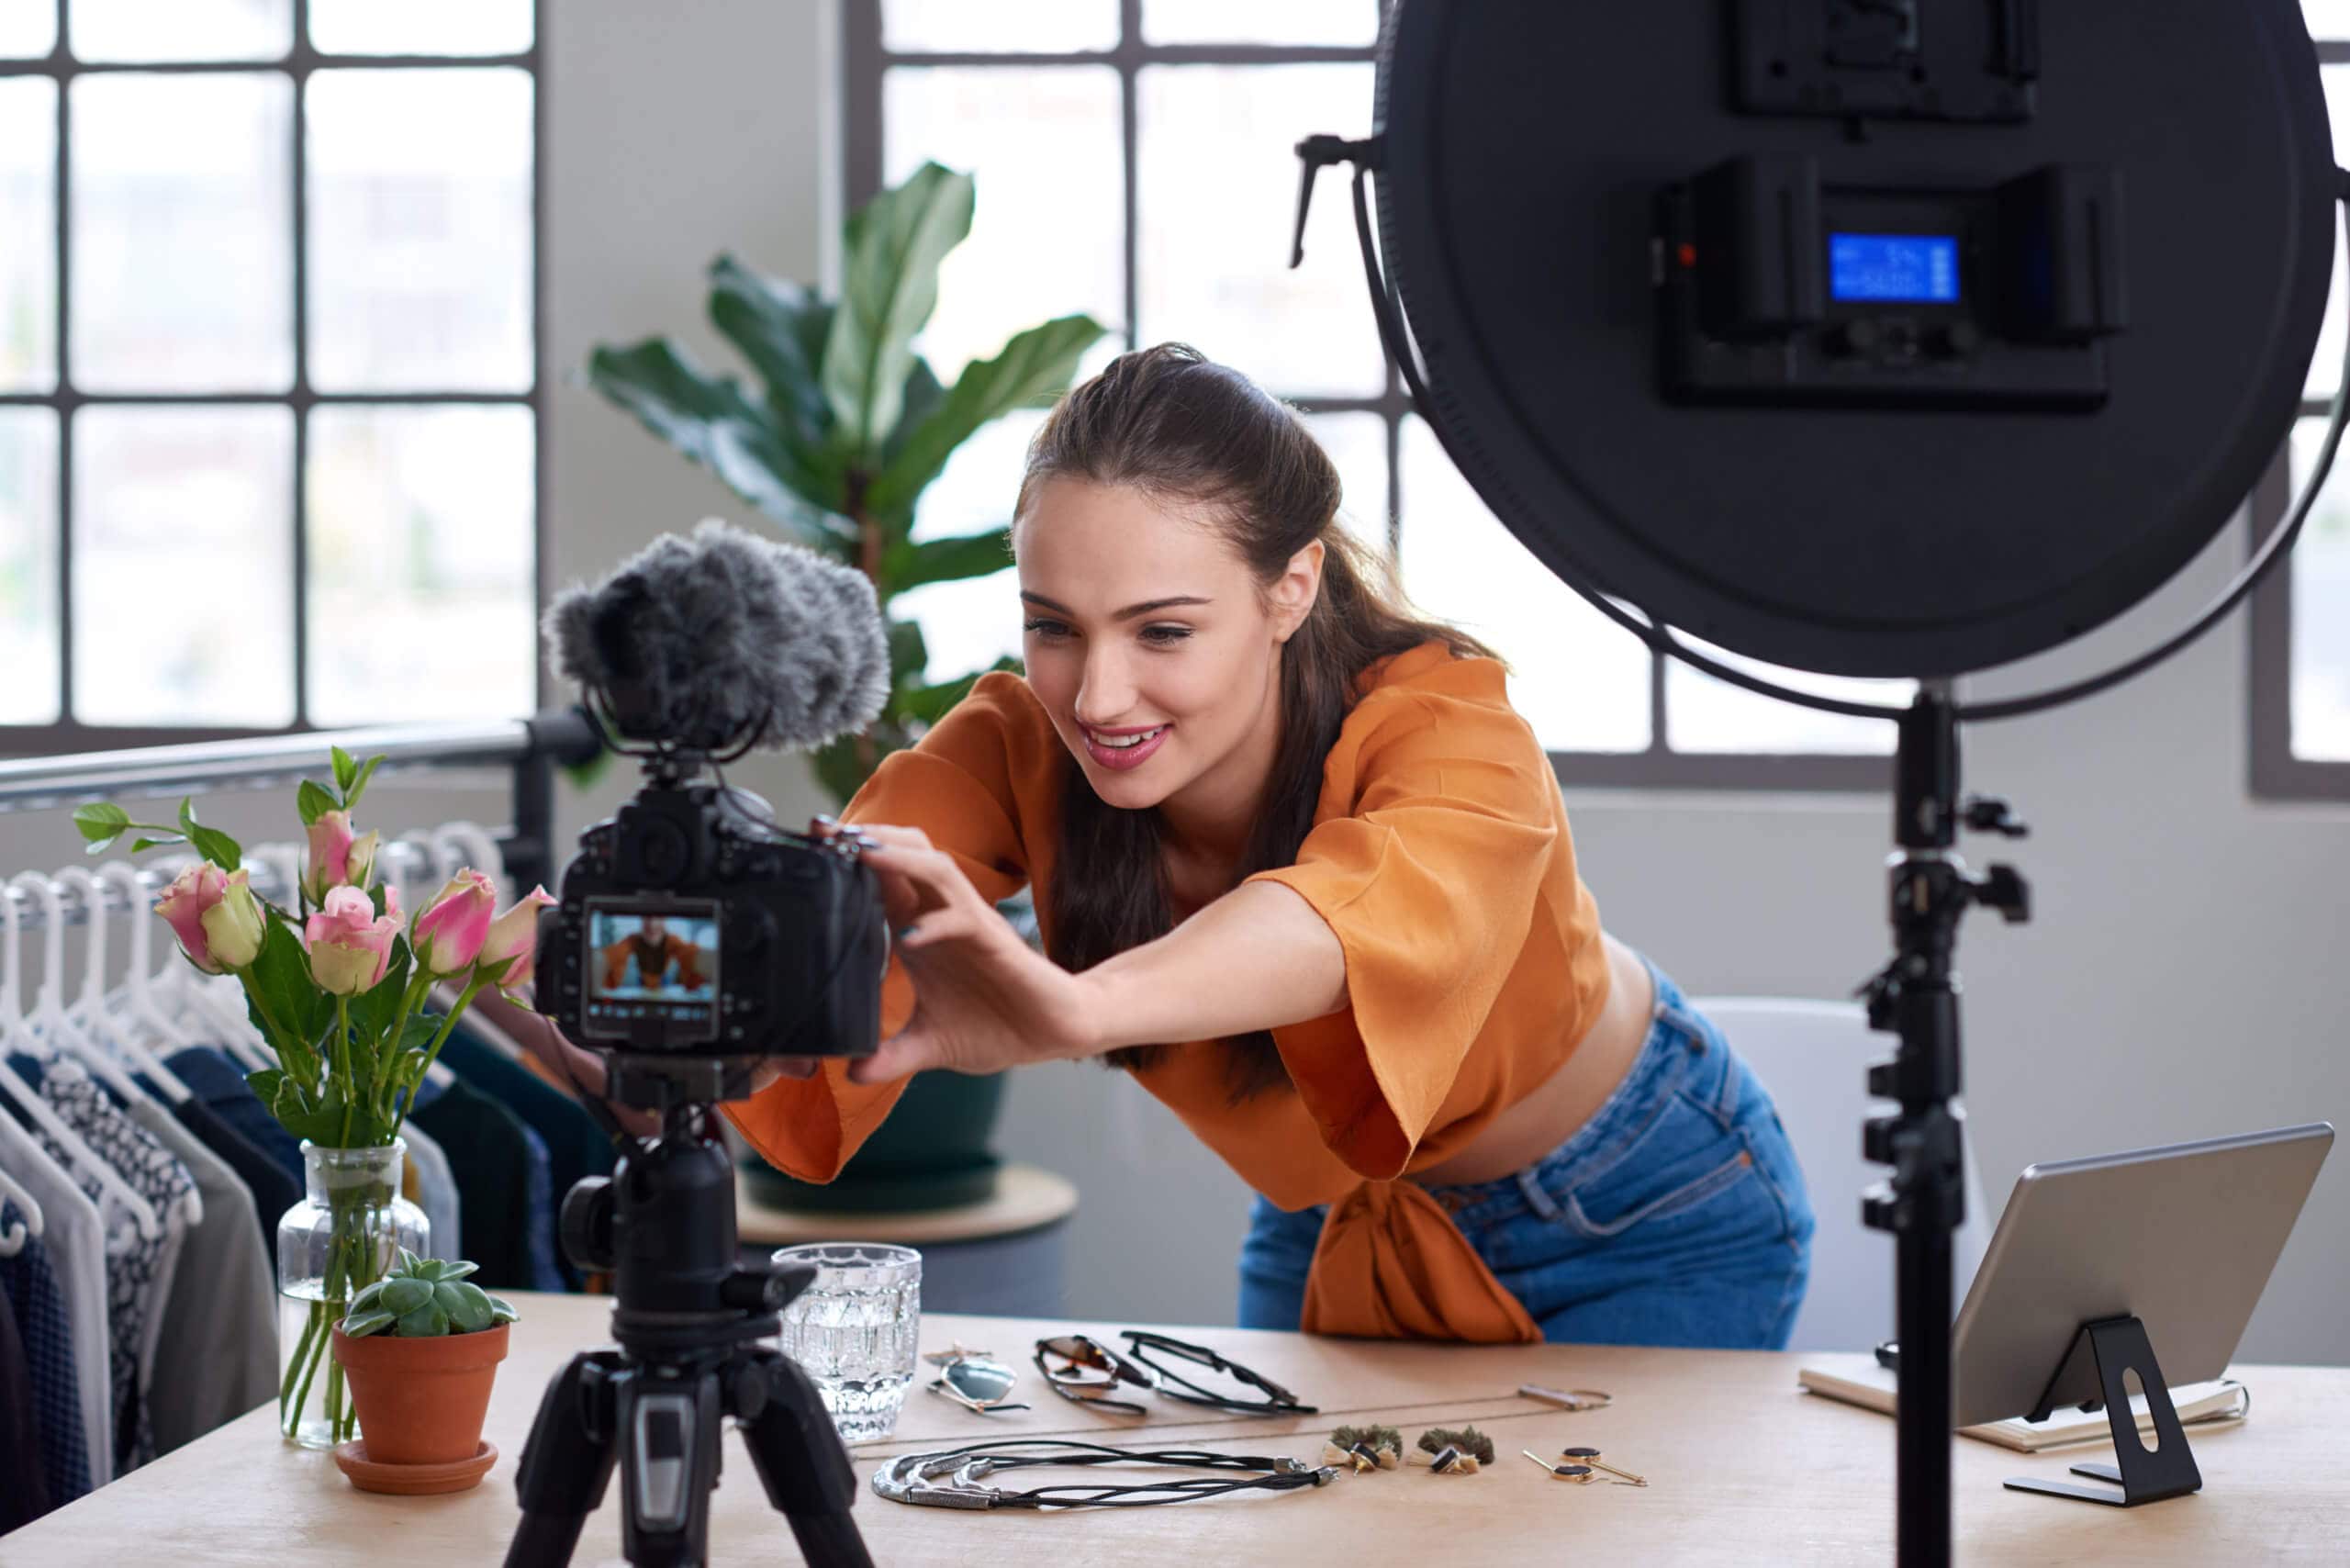 Online Content Creator Vlogger Adjusting Her Recording Equipment